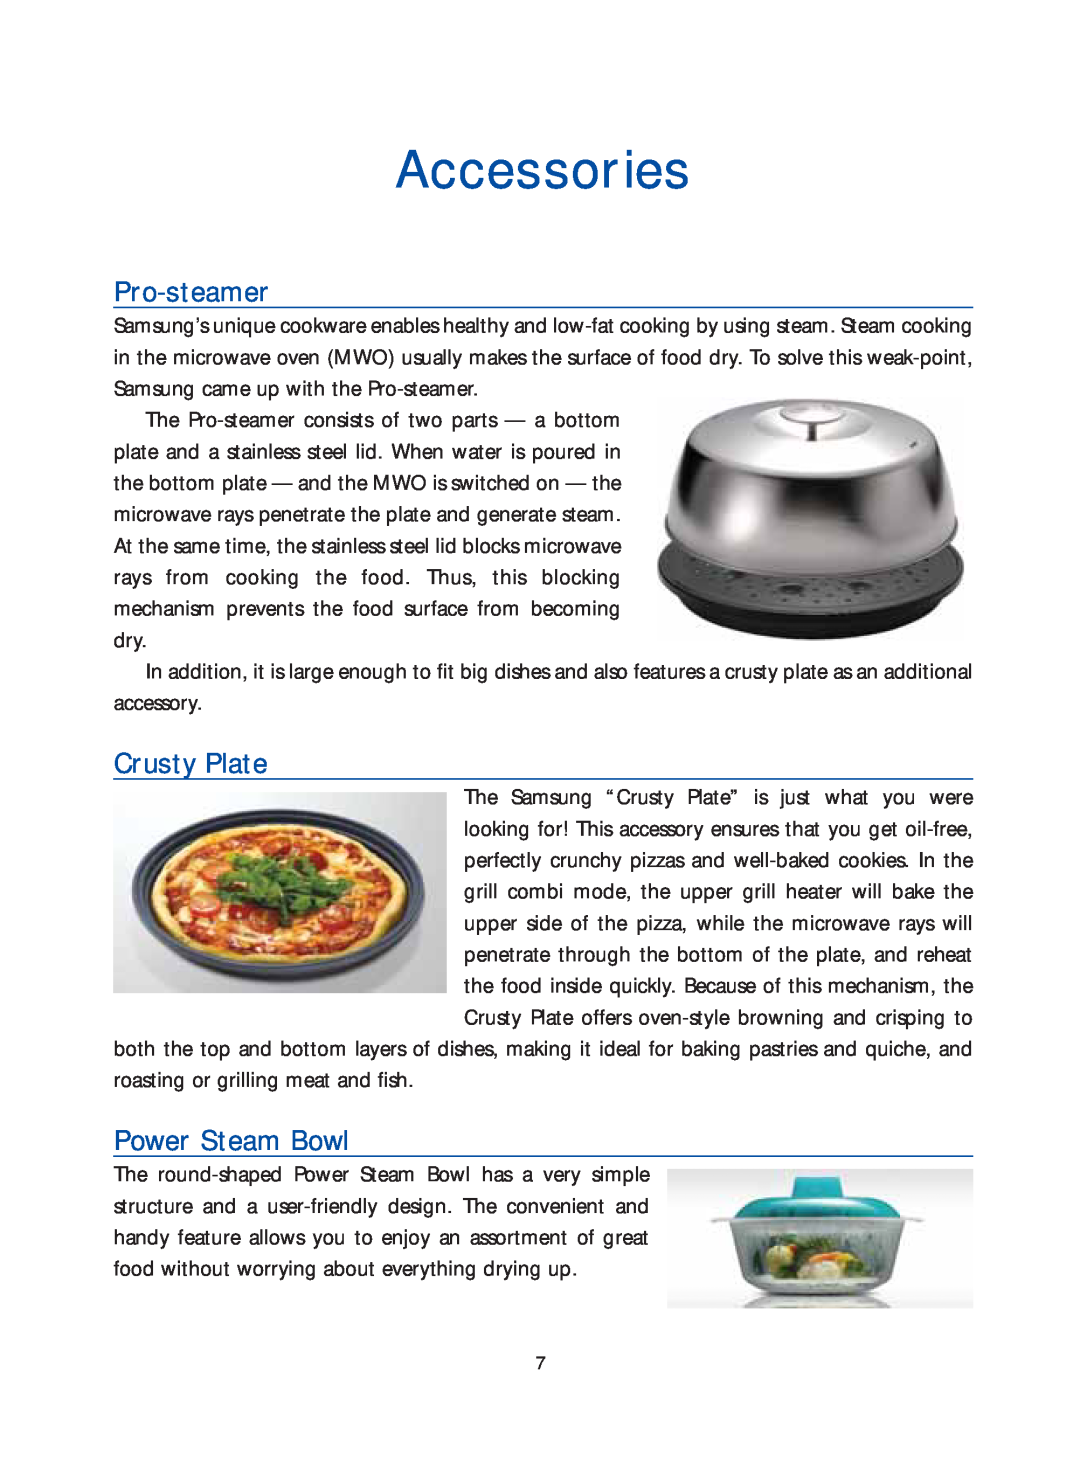 Samsung Microwave Oven warranty Accessories, Pro-steamer, Crusty Plate, Power Steam Bowl 